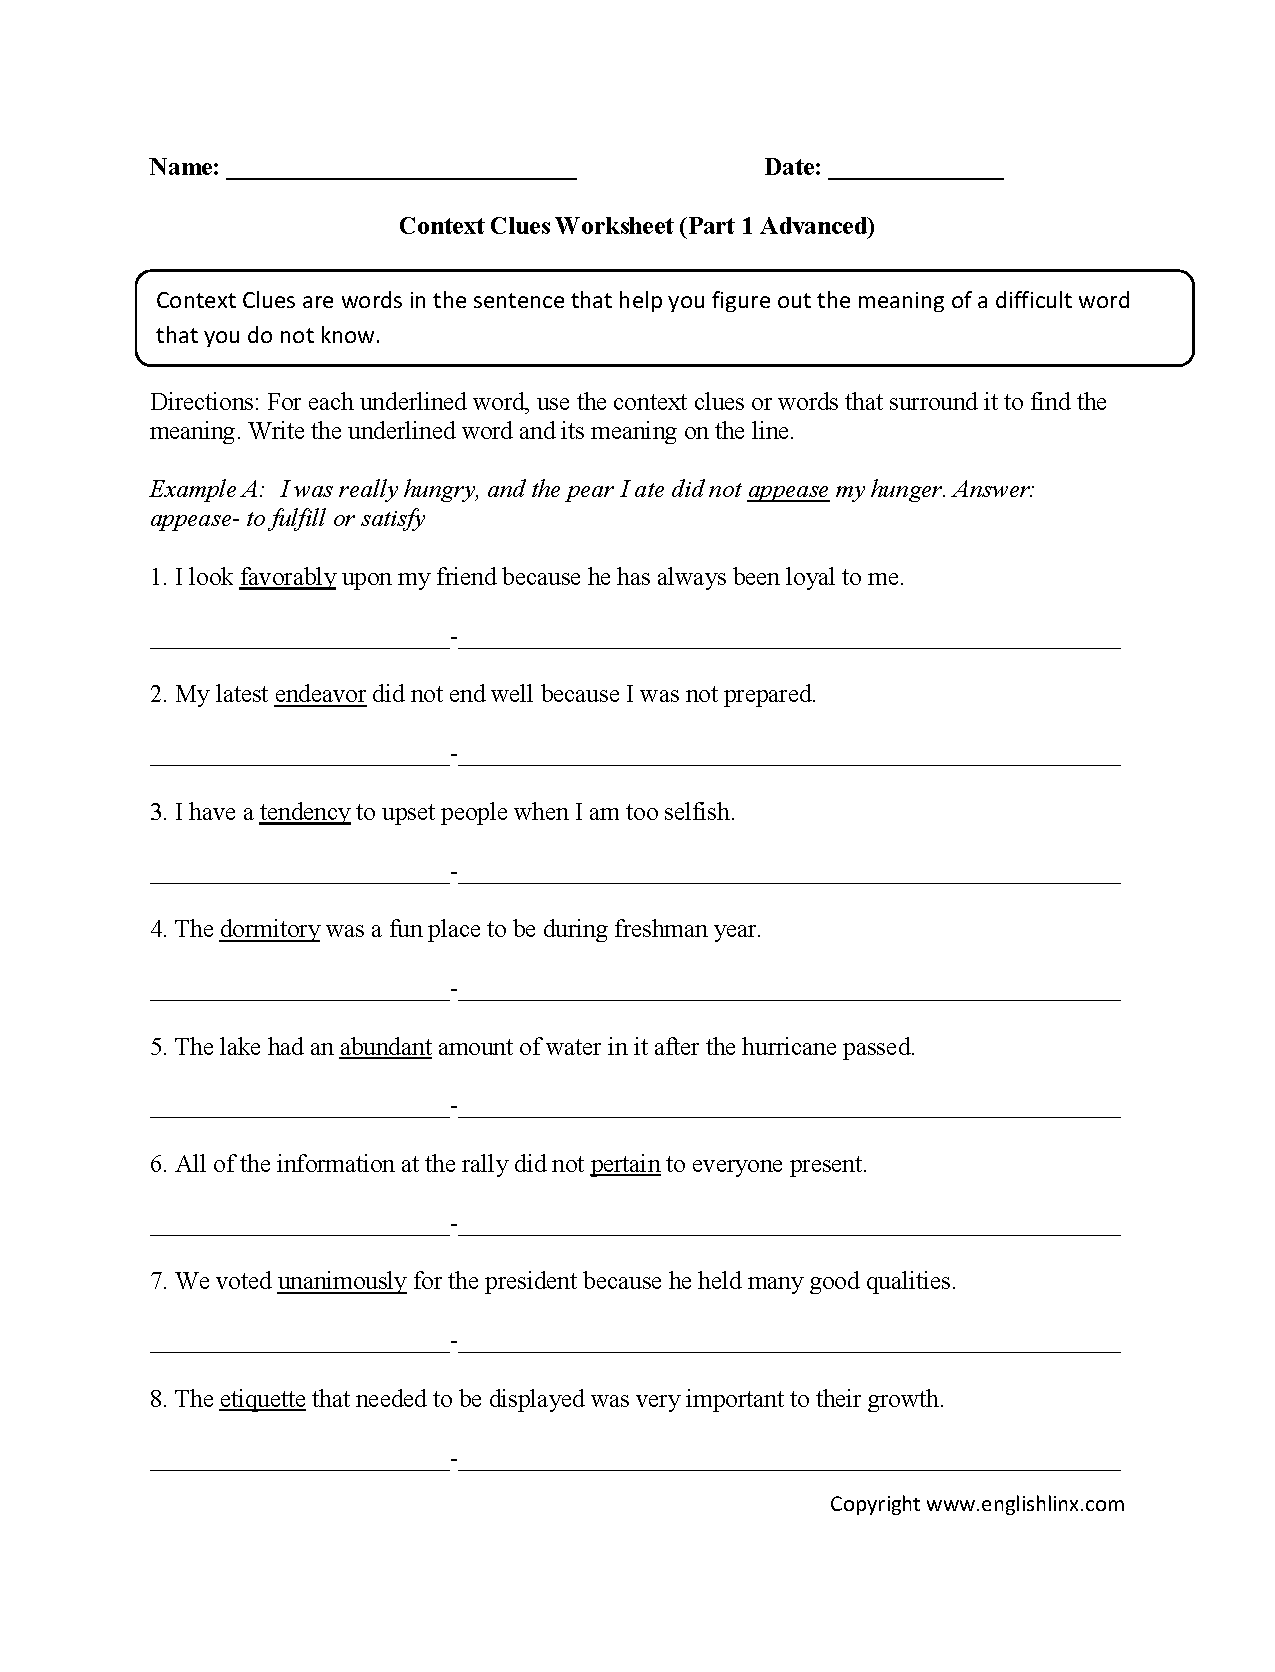 Context Clues Worksheets Part 1 Advanced